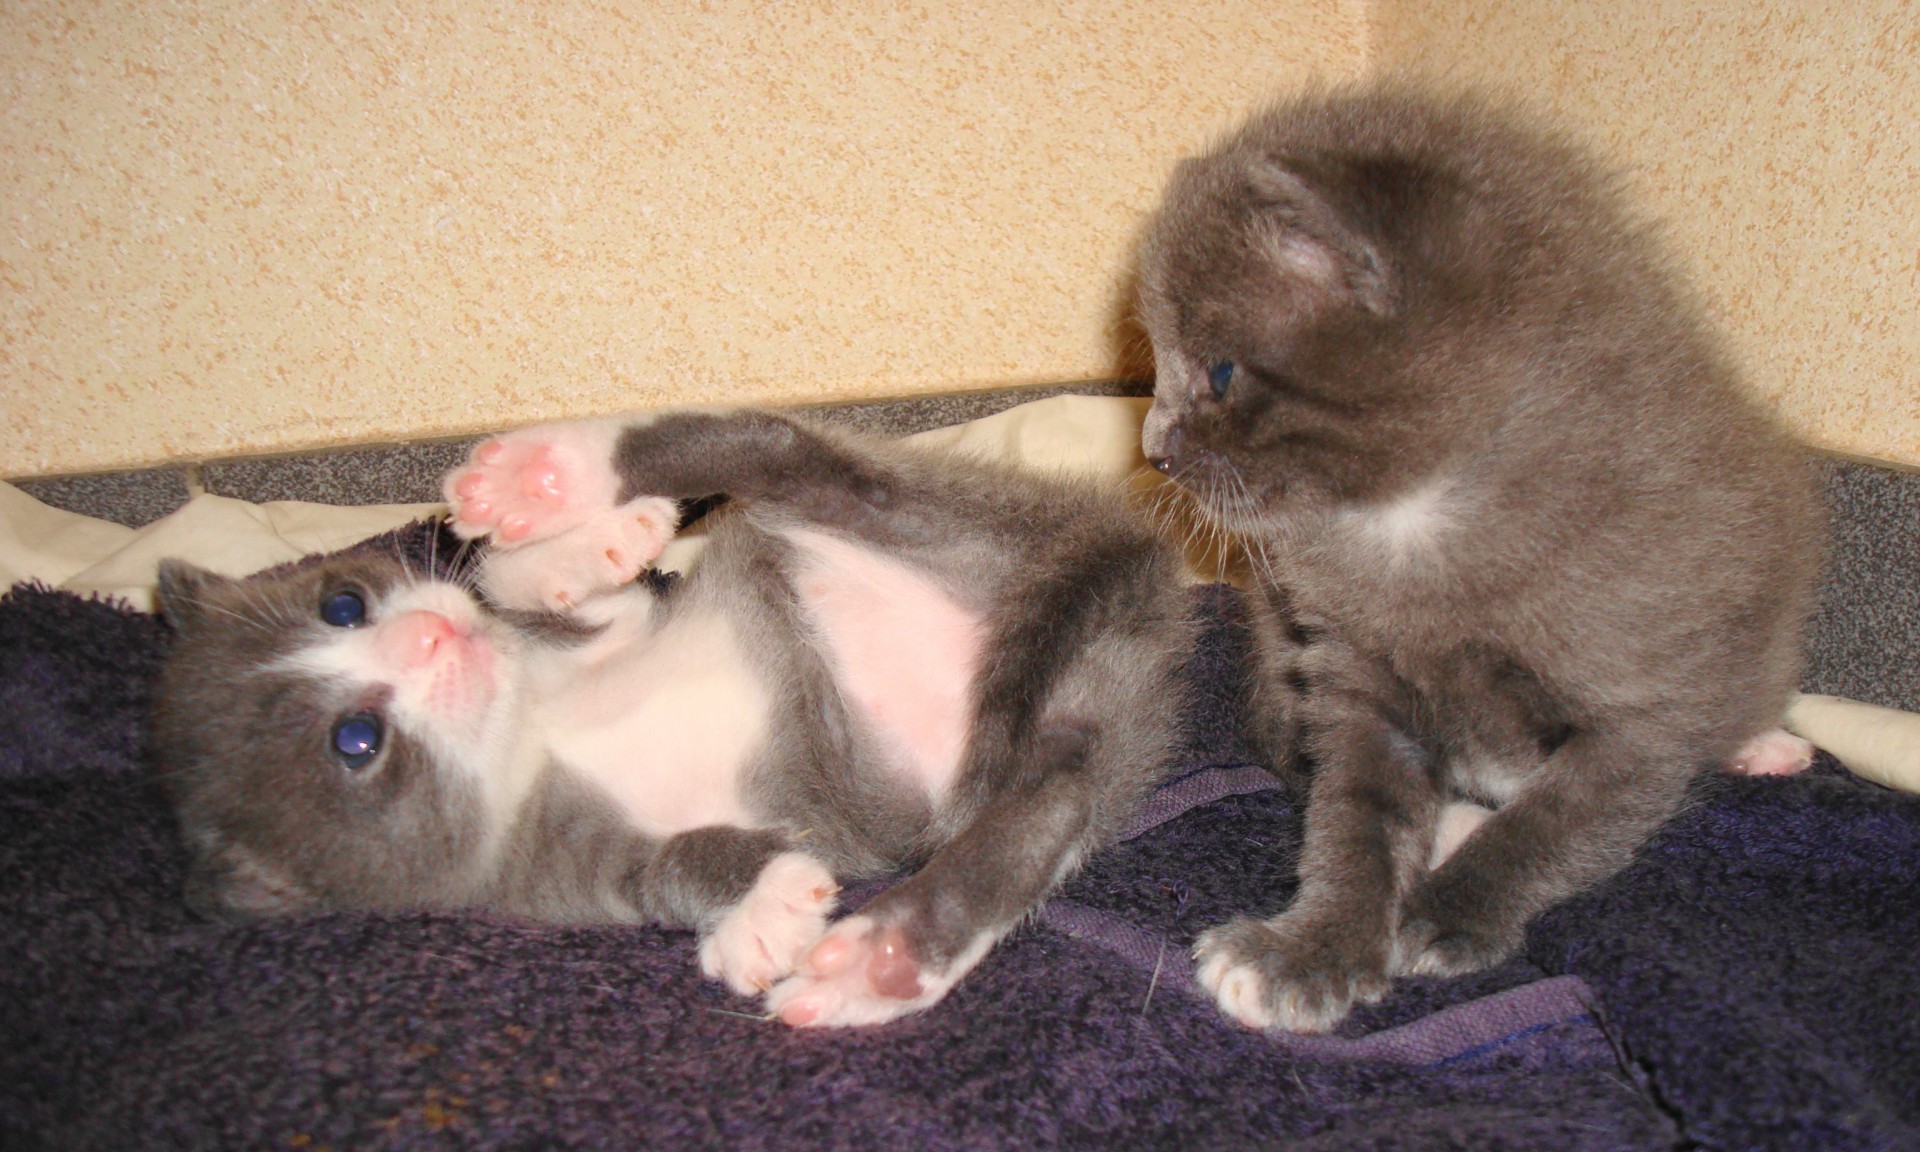 Two playing, newborn kittens.